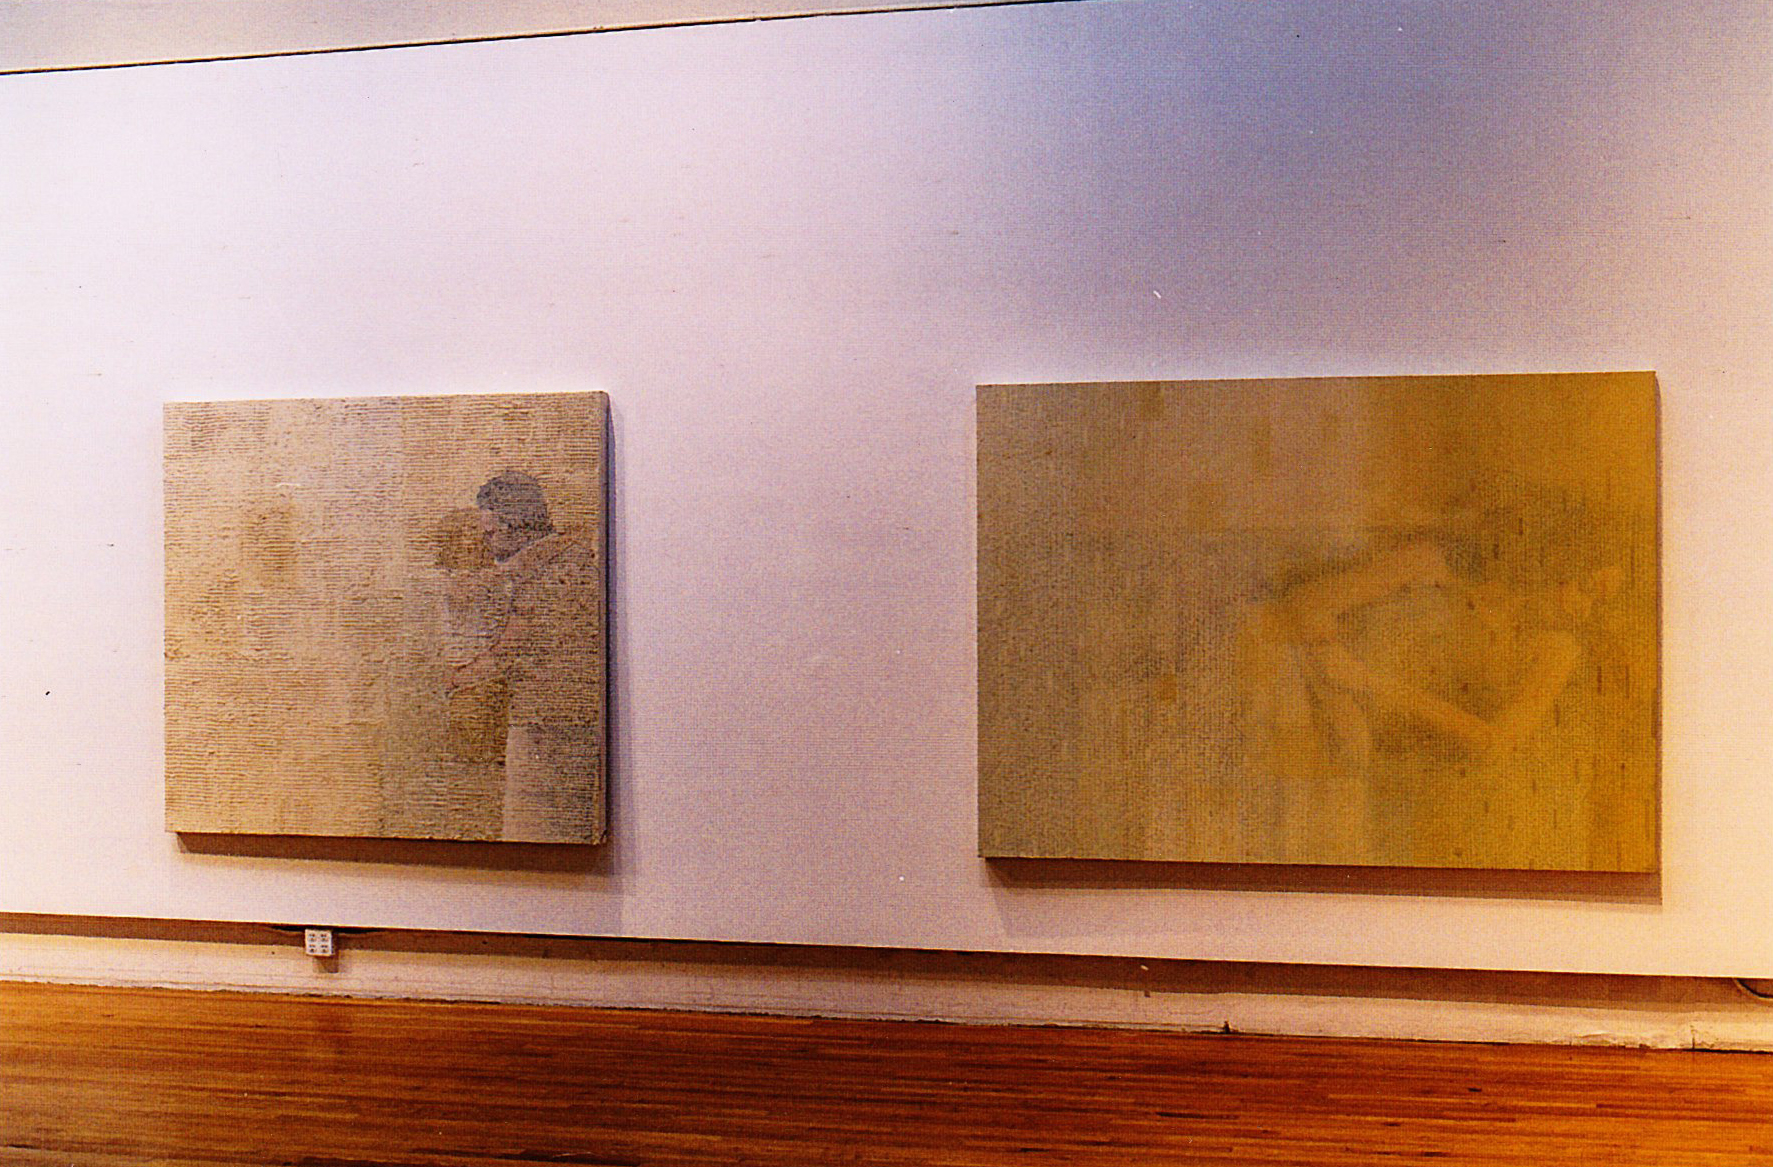  Diego Rivera Gallery, 2004 